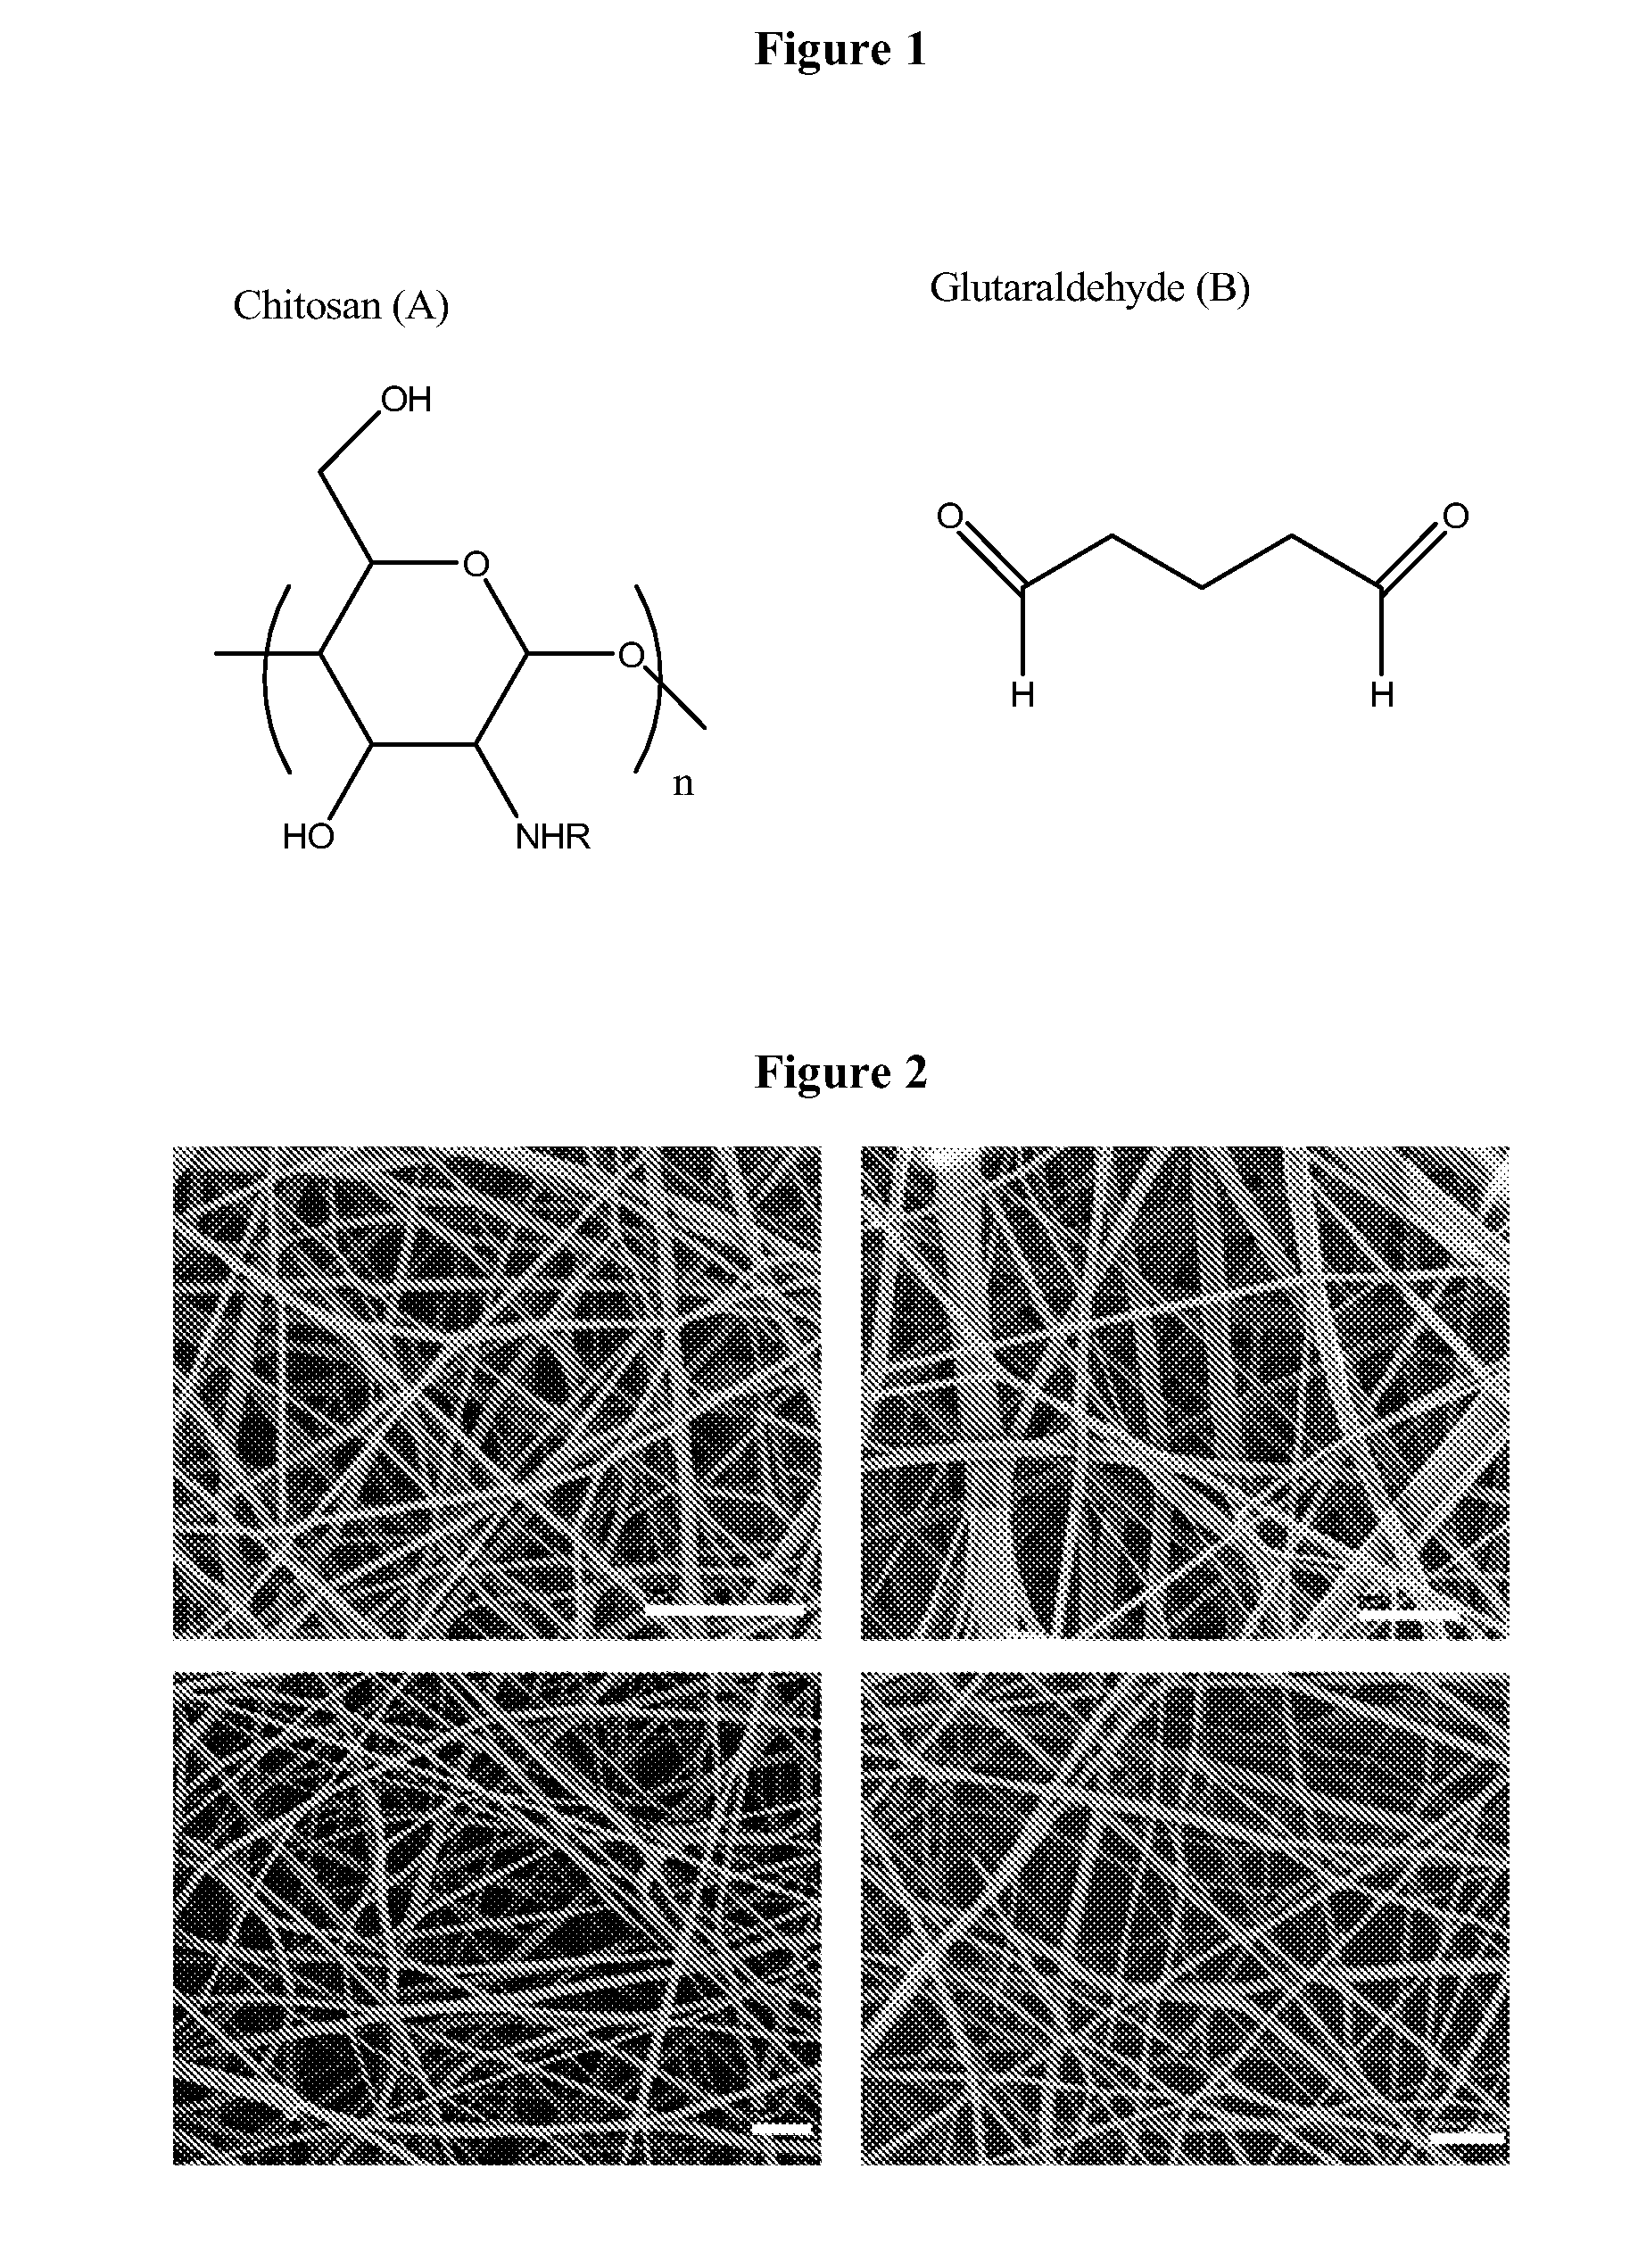 Fibrous mats containing chitosan nanofibers